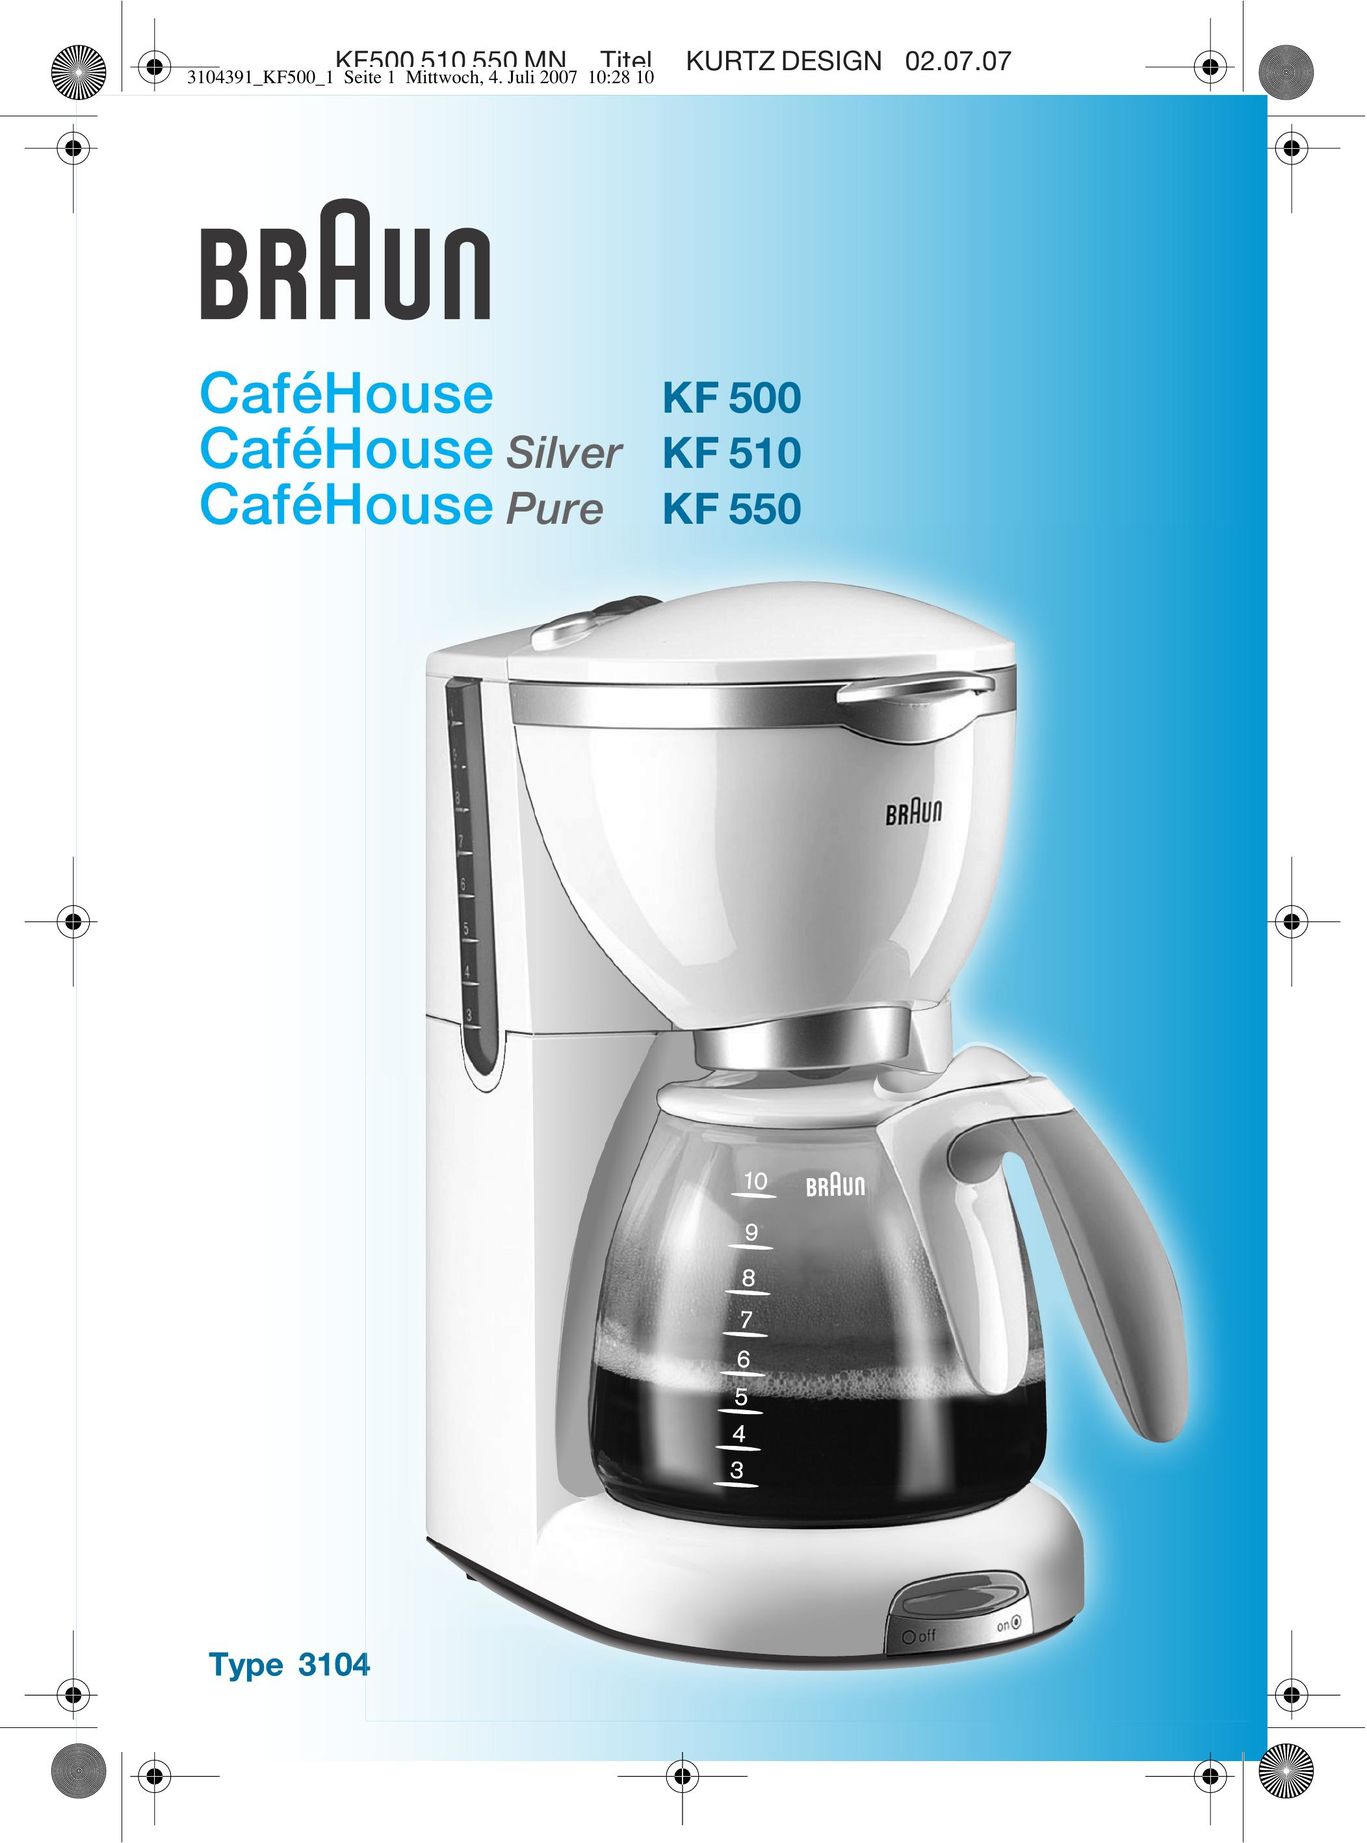 Braun CafHouse KF 500 Coffeemaker User Manual